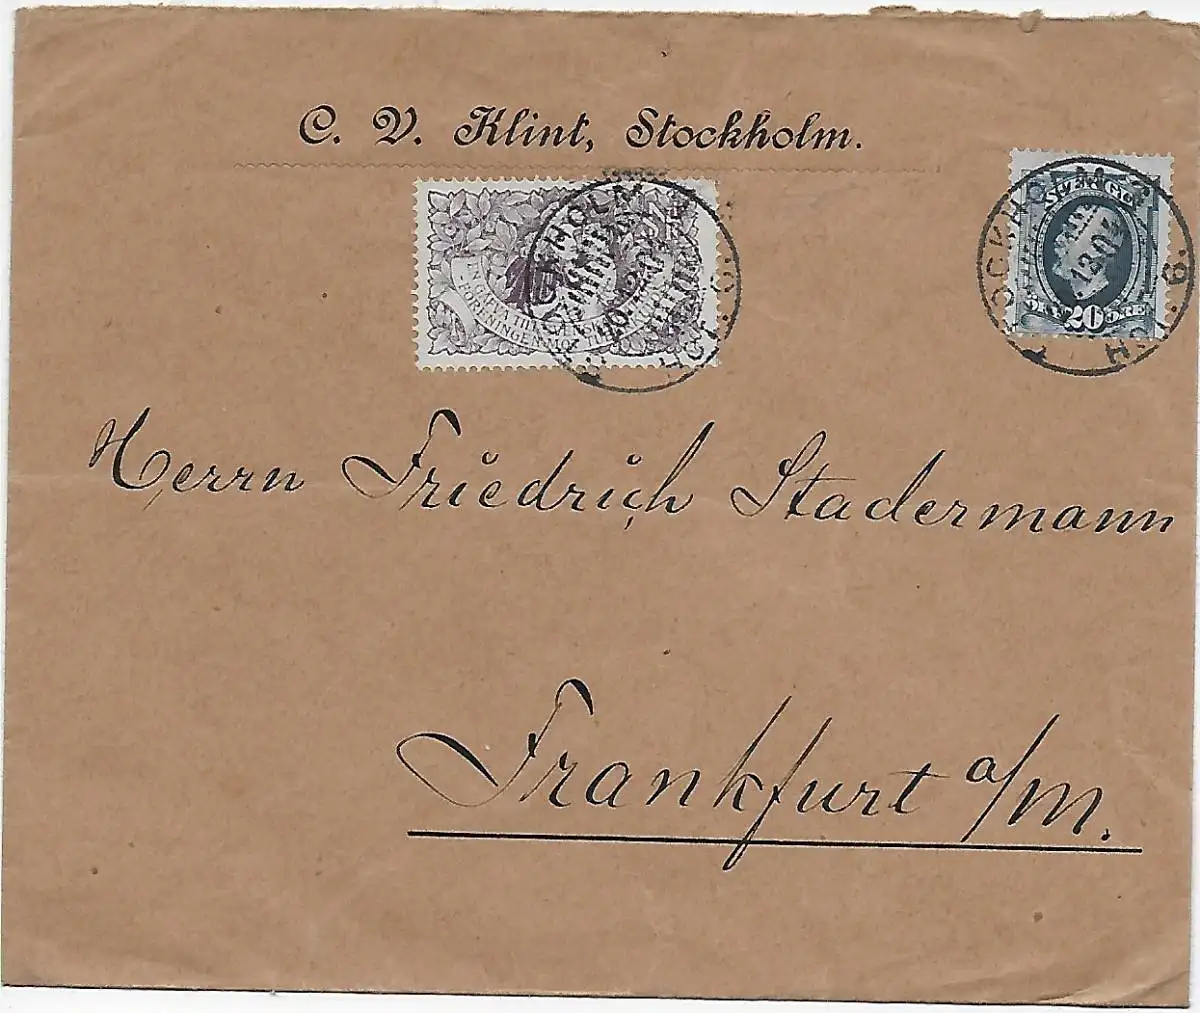 Stockholm 1904 Tuberkulose Vignette, nach Frankfurt